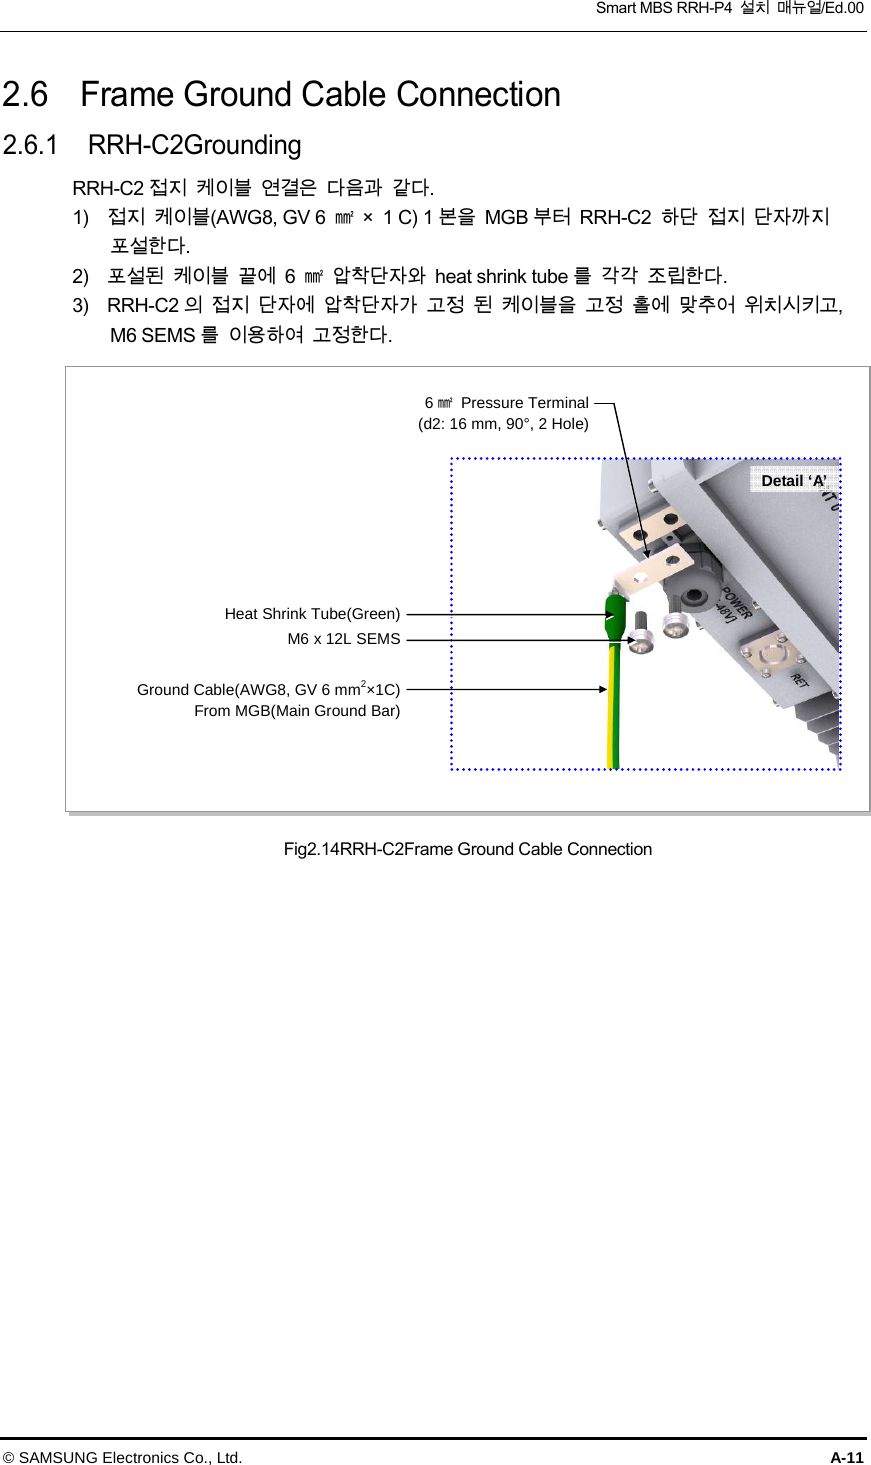  Smart MBS RRH-P4  설치  매뉴얼/Ed.00 © SAMSUNG Electronics Co., Ltd.  A-11 2.6    Frame Ground Cable Connection 2.6.1  RRH-C2Grounding RRH-C2 접지  케이블  연결은  다음과  같다. 1)    접지  케이블(AWG8, GV 6  ㎟  ×  1 C) 1 본을  MGB 부터  RRH-C2  하단  접지  단자까지   포설한다. 2)    포설된  케이블  끝에  6  ㎟  압착단자와  heat shrink tube 를  각각  조립한다. 3)    RRH-C2 의  접지  단자에  압착단자가  고정  된  케이블을  고정  홀에  맞추어  위치시키고,   M6 SEMS 를  이용하여  고정한다. Fig2.14RRH-C2Frame Ground Cable ConnectionM6 x 12L SEMSGround Cable(AWG8, GV 6 mm2×1C)From MGB(Main Ground Bar)Detail ‘A’ Heat Shrink Tube(Green)6㎟Pressure Terminal(d2: 16 mm, 90°, 2 Hole)